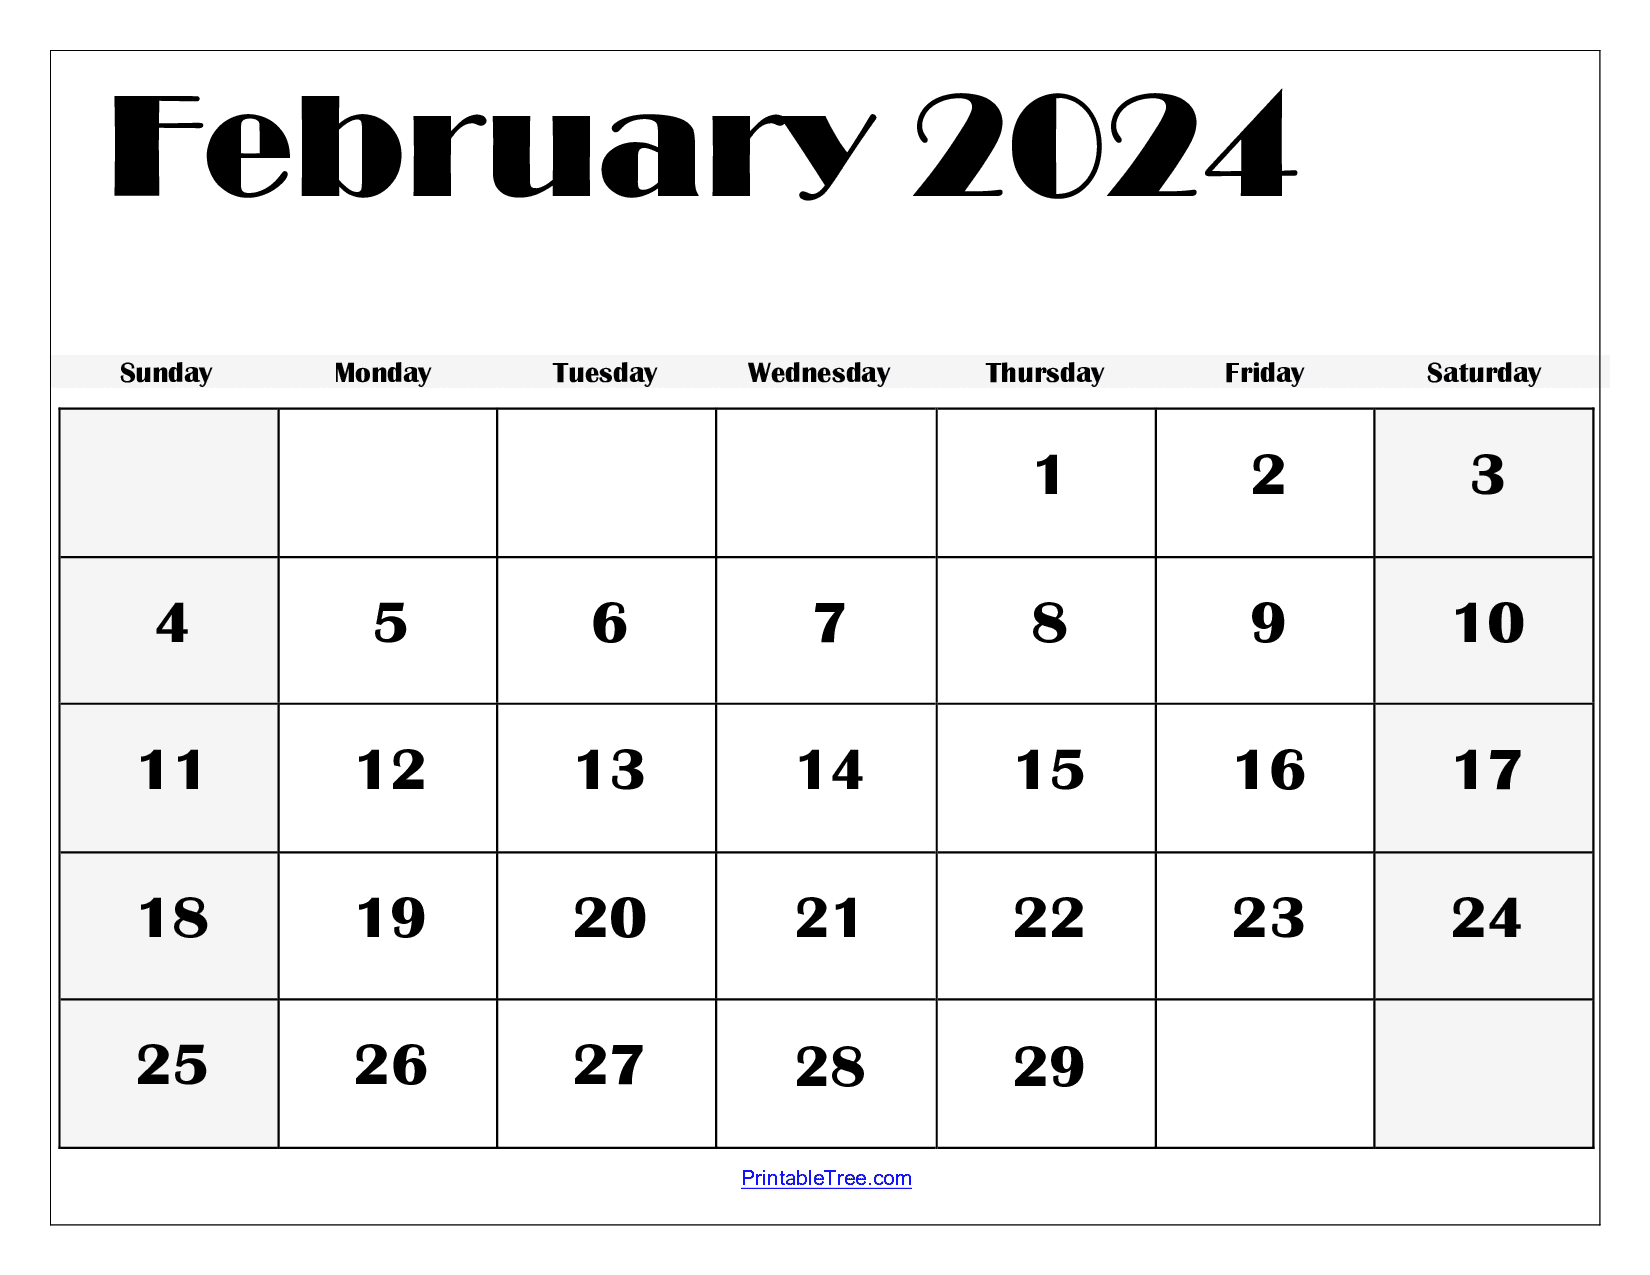 February 2024 Calendar Printable Pdf Template With Holidays for February 2024 Free Calendar Printable